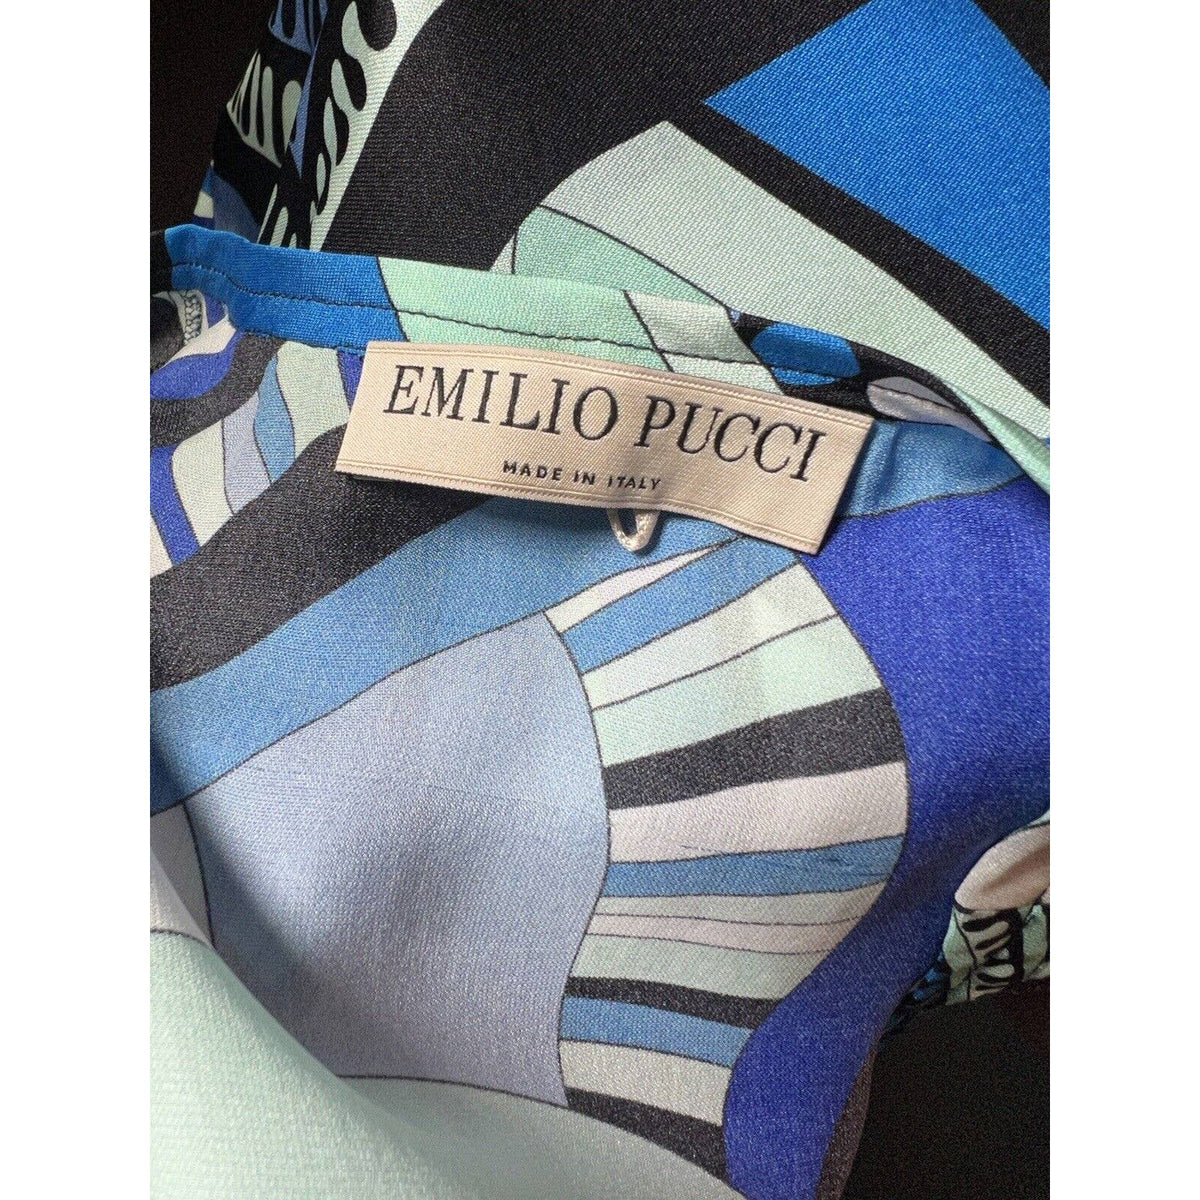 Emilio Pucci Blue Abstract Blouse 100% Silk Sz.14